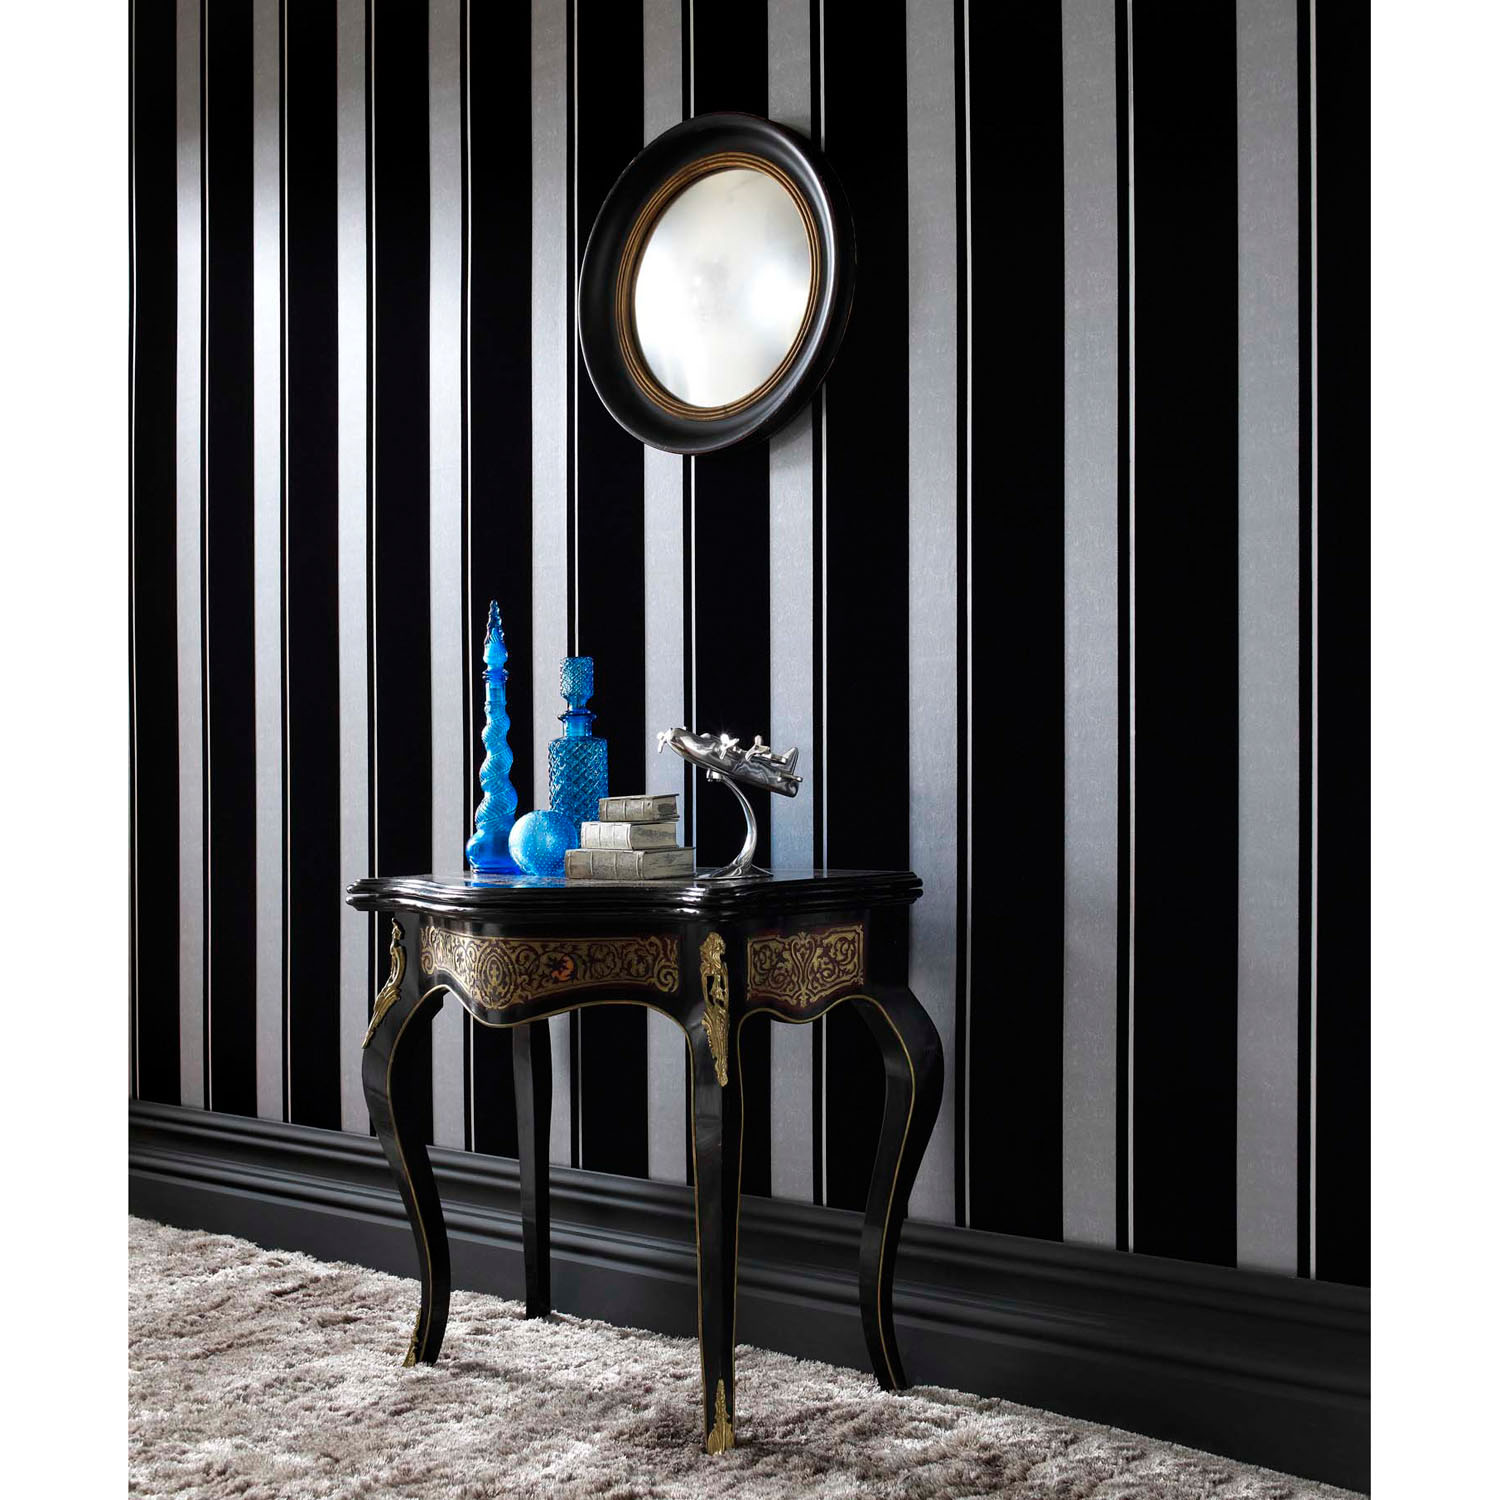 Designer Flock Star Stripe Wallpaper In Black And Silver 10m Roll